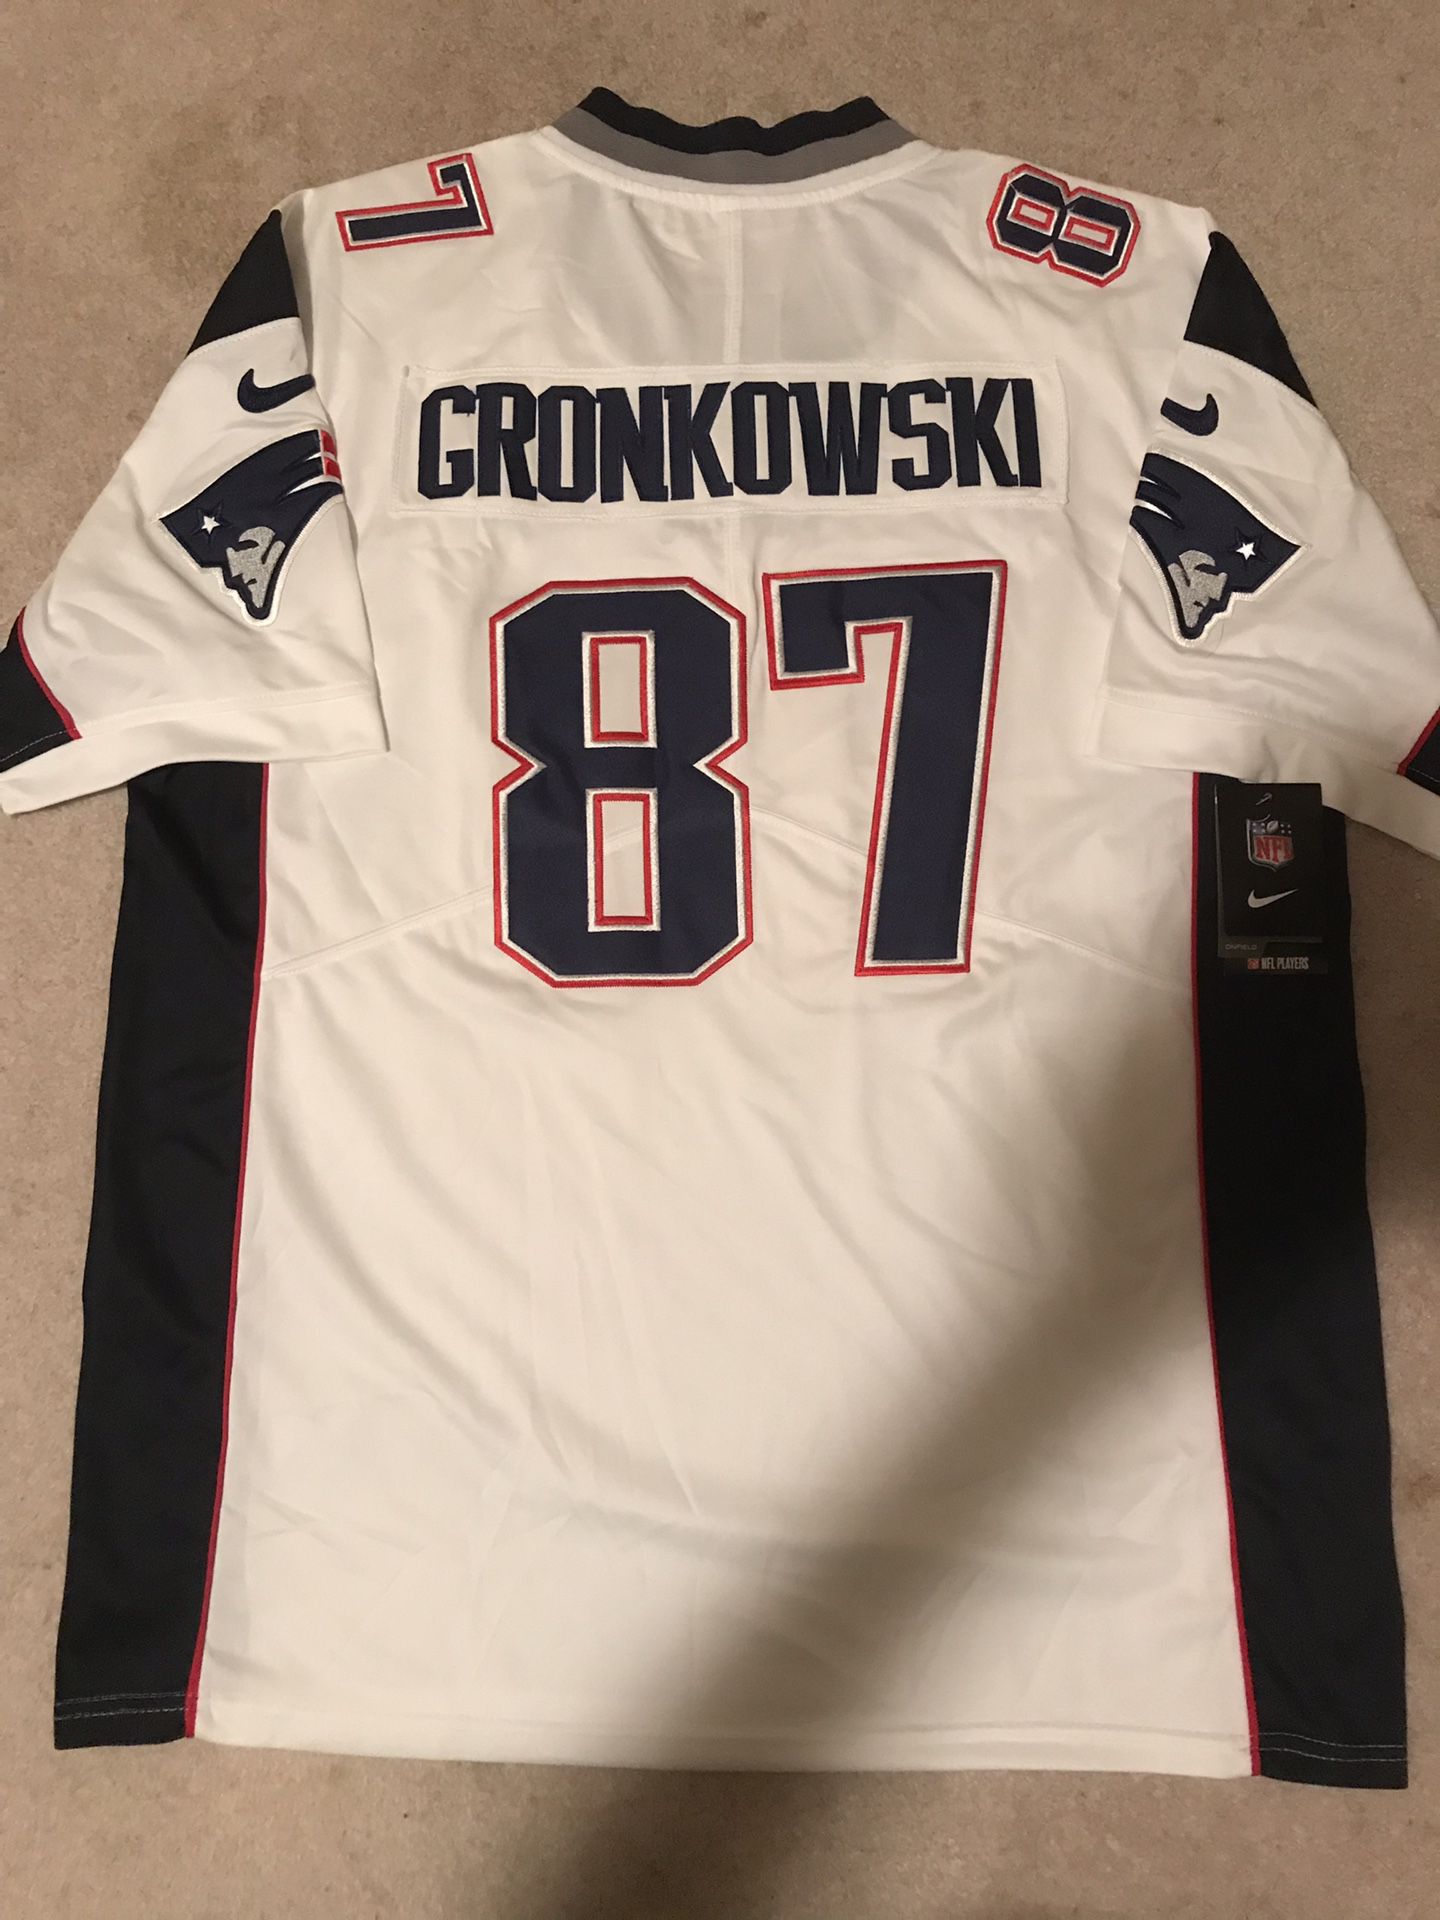 Rob Gronkowski patriots jersey size XL